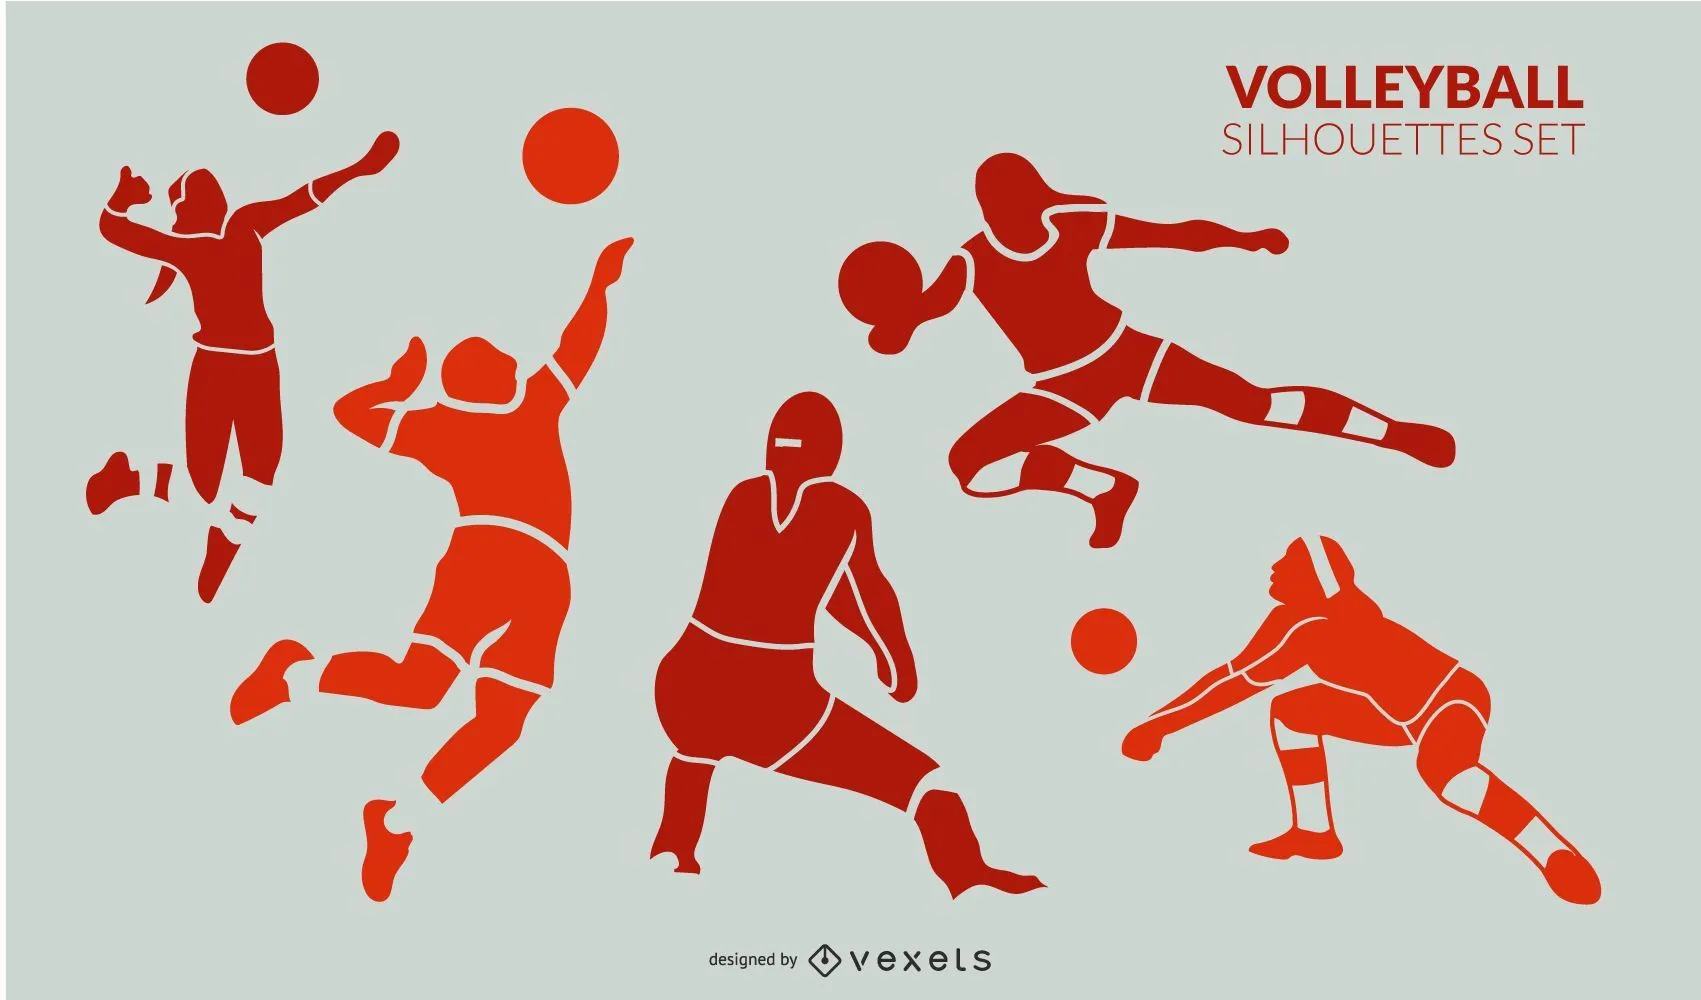 Vectores & Gráficos de volleyball para descargar